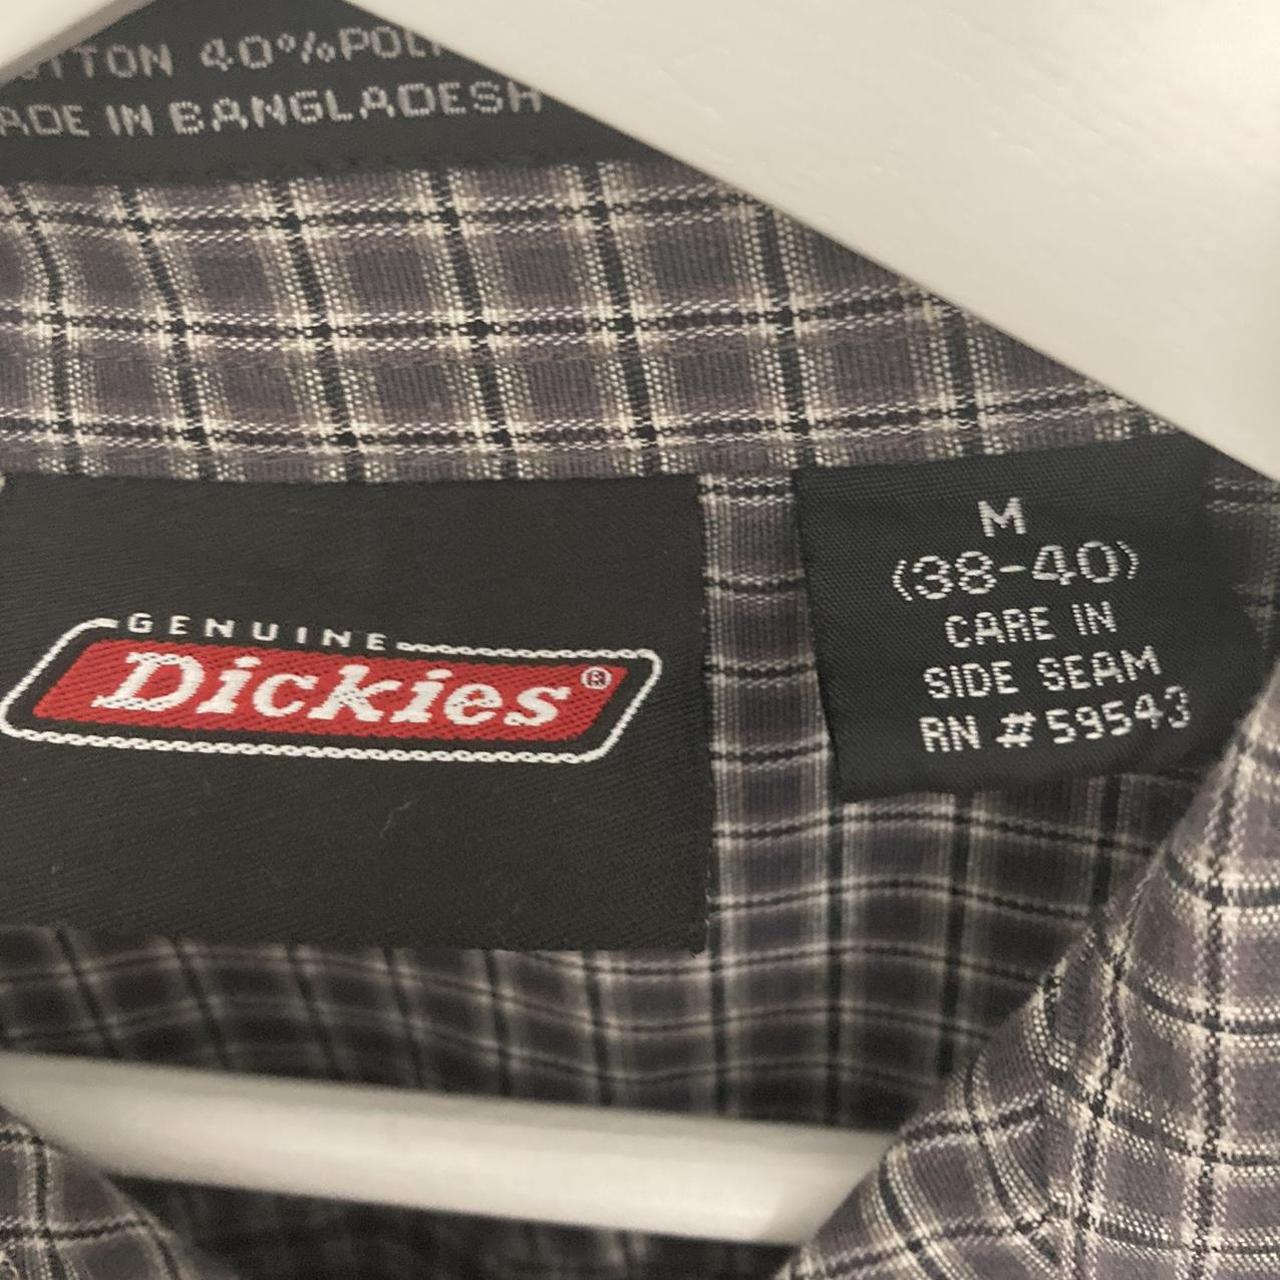 Genuine Dickies Plaid Shirt Excellent condition... - Depop